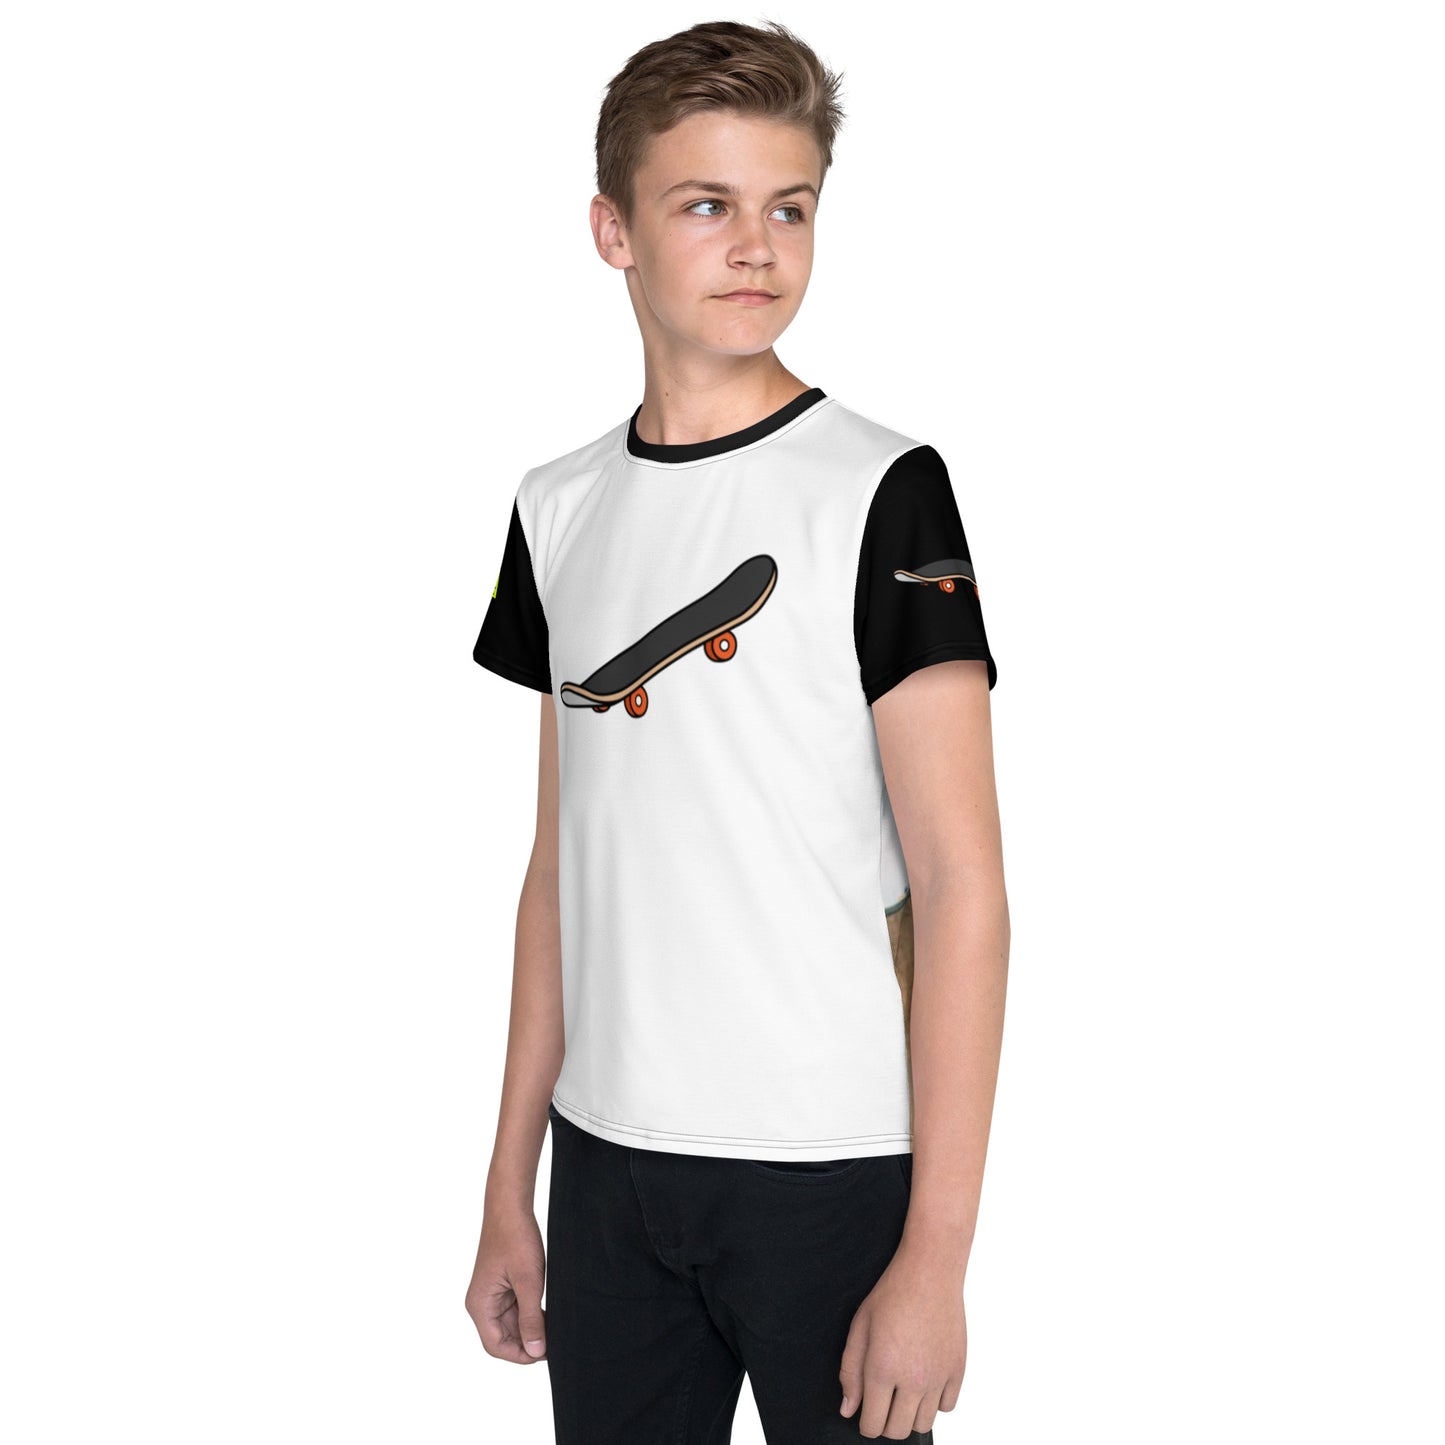 I Skate 954 Youth crew neck t-shirt